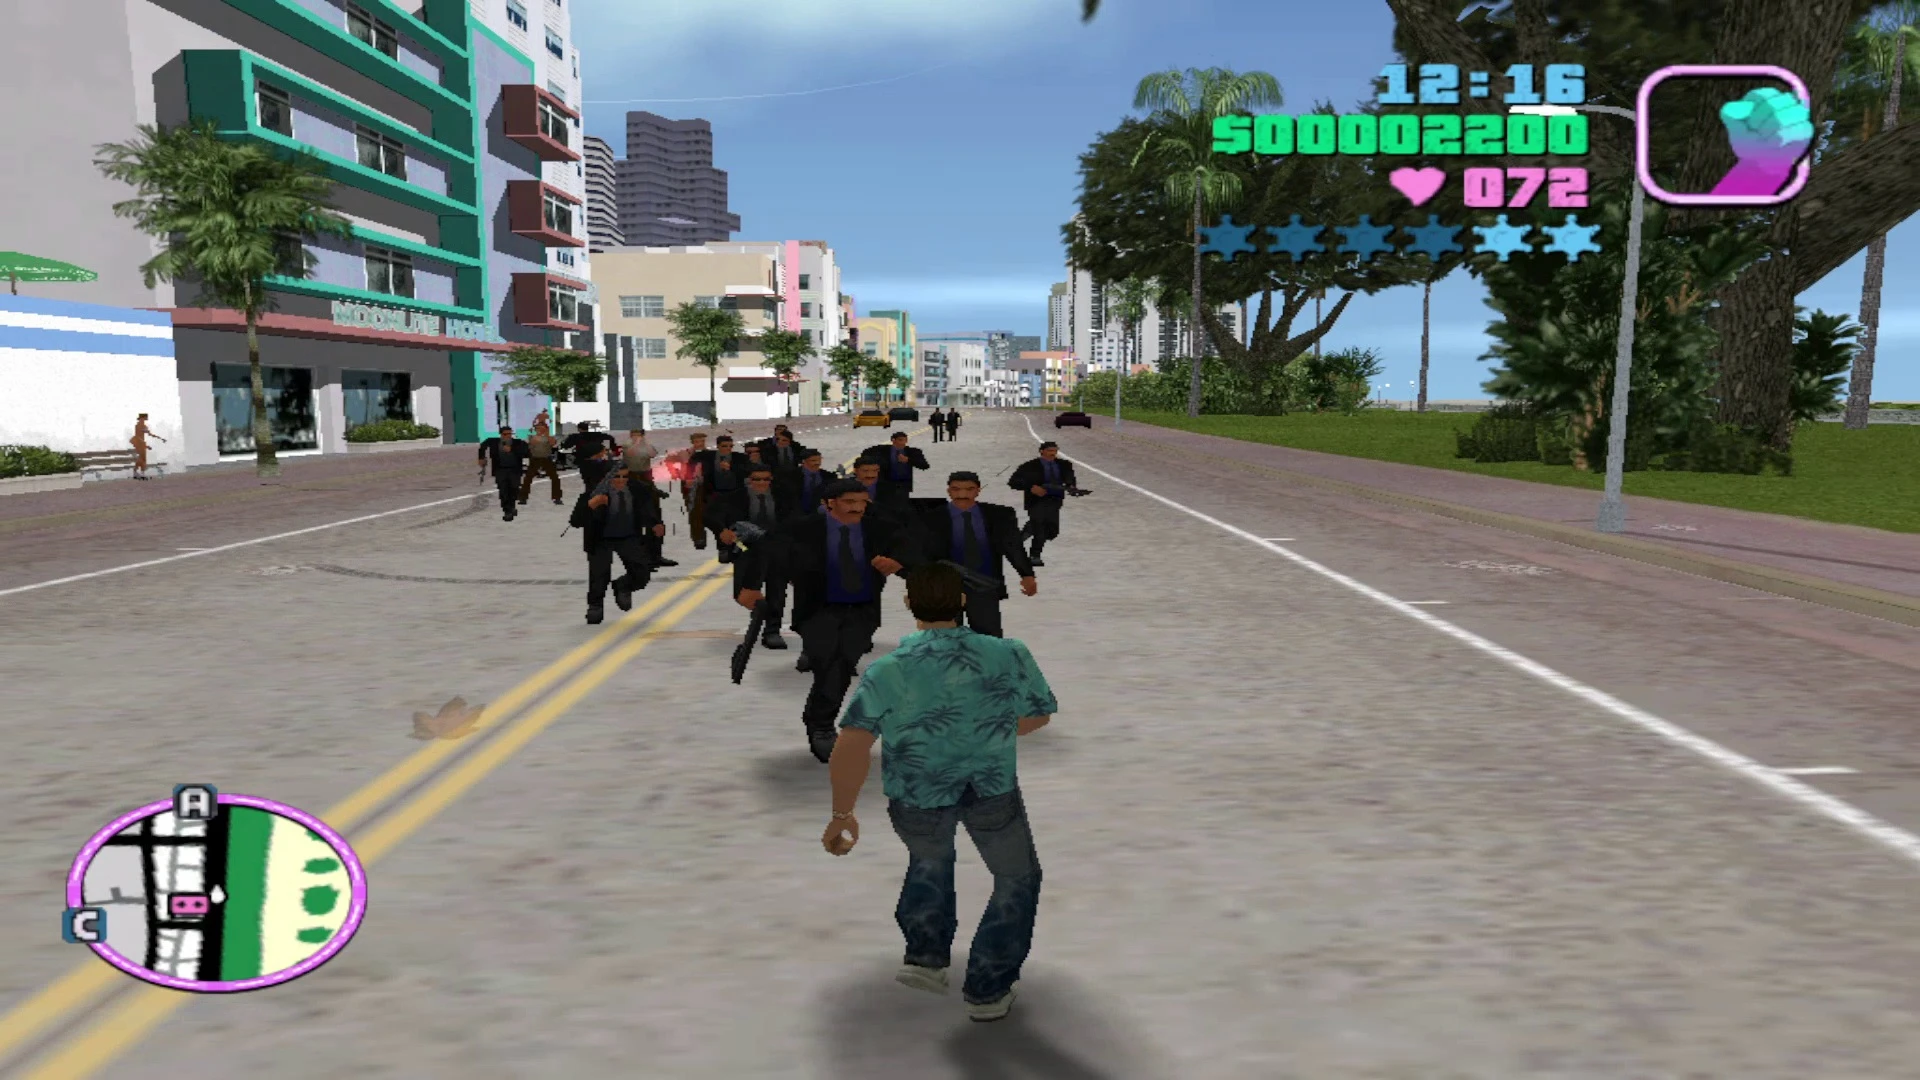 Black suit bodyguard [Grand Theft Auto: Vice City] [Mods]